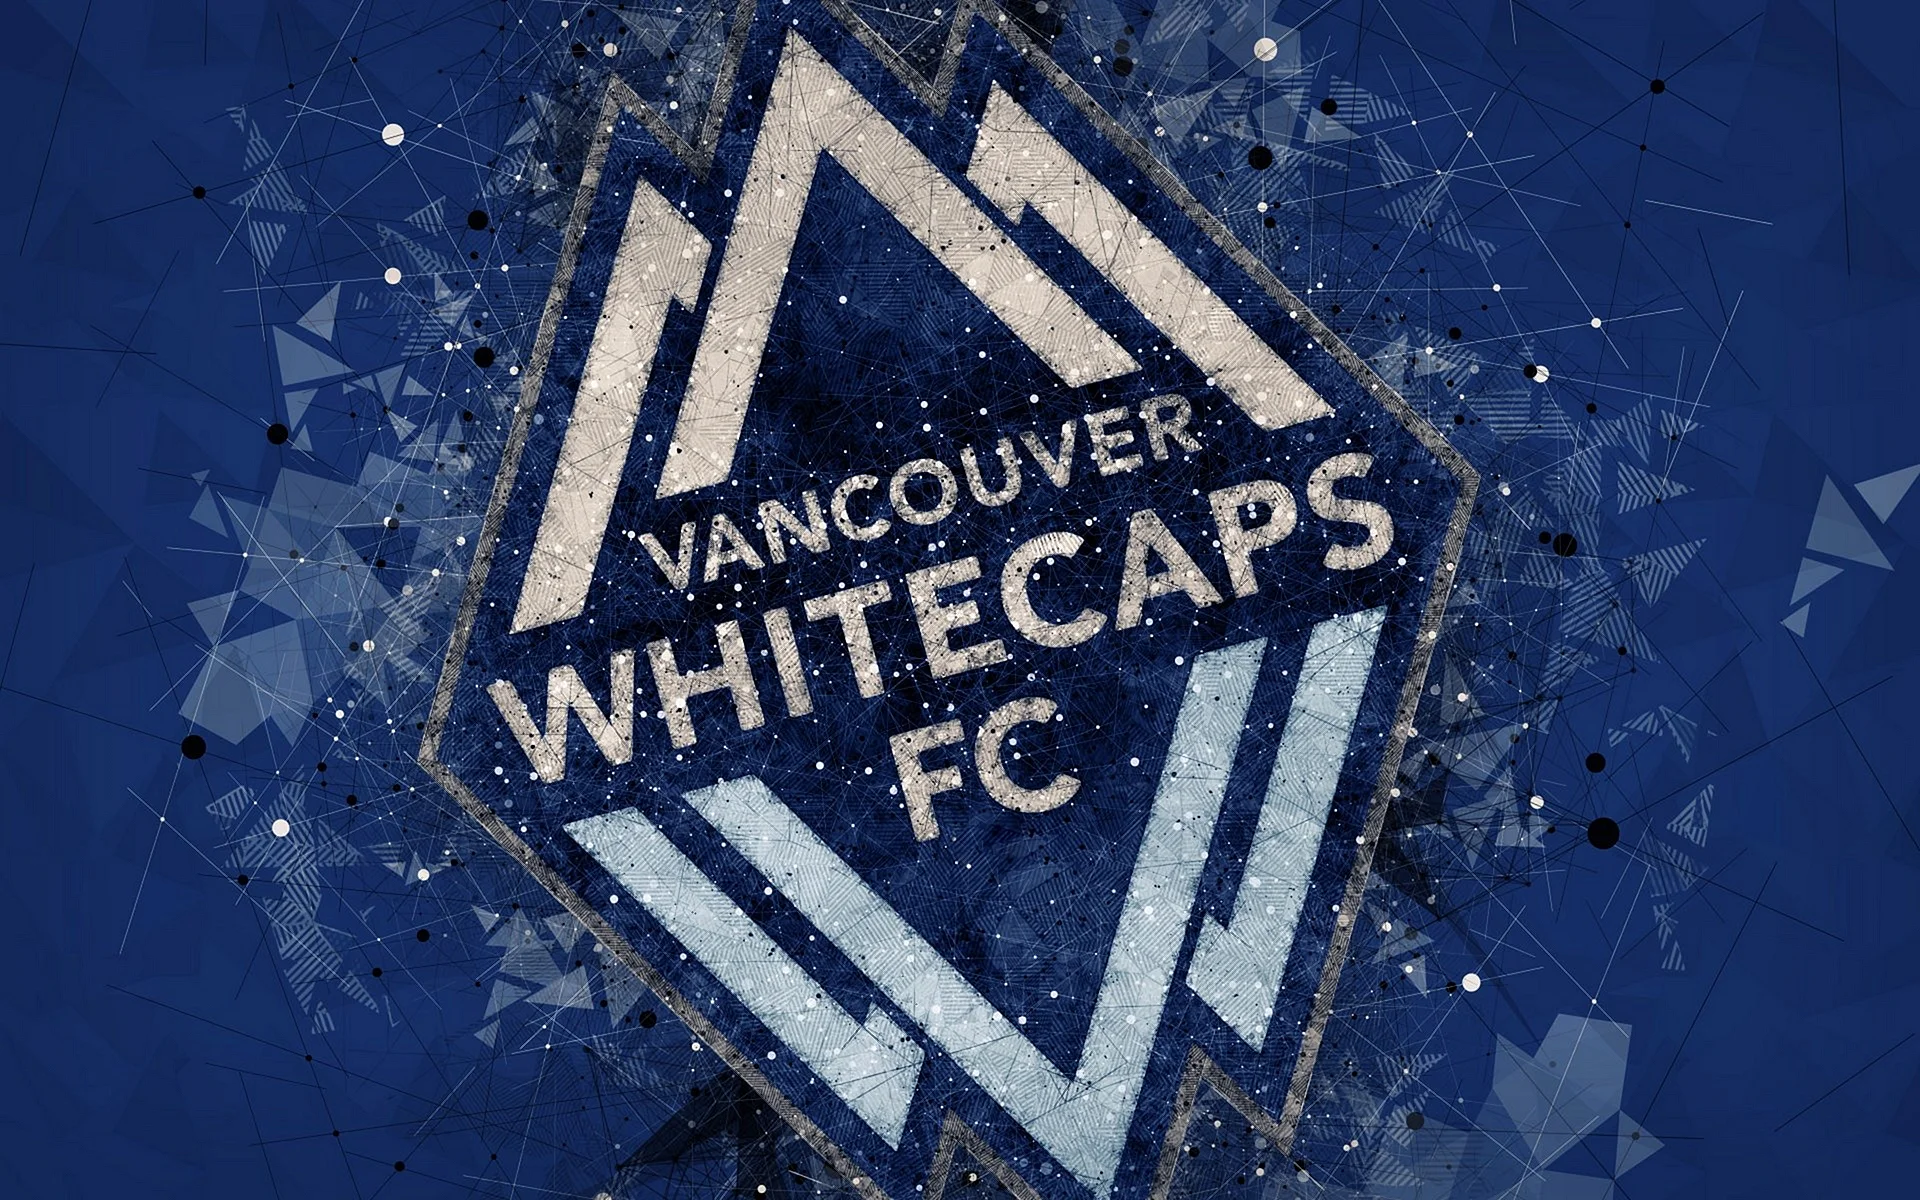 Vancouver Whitecaps Fc Wallpaper